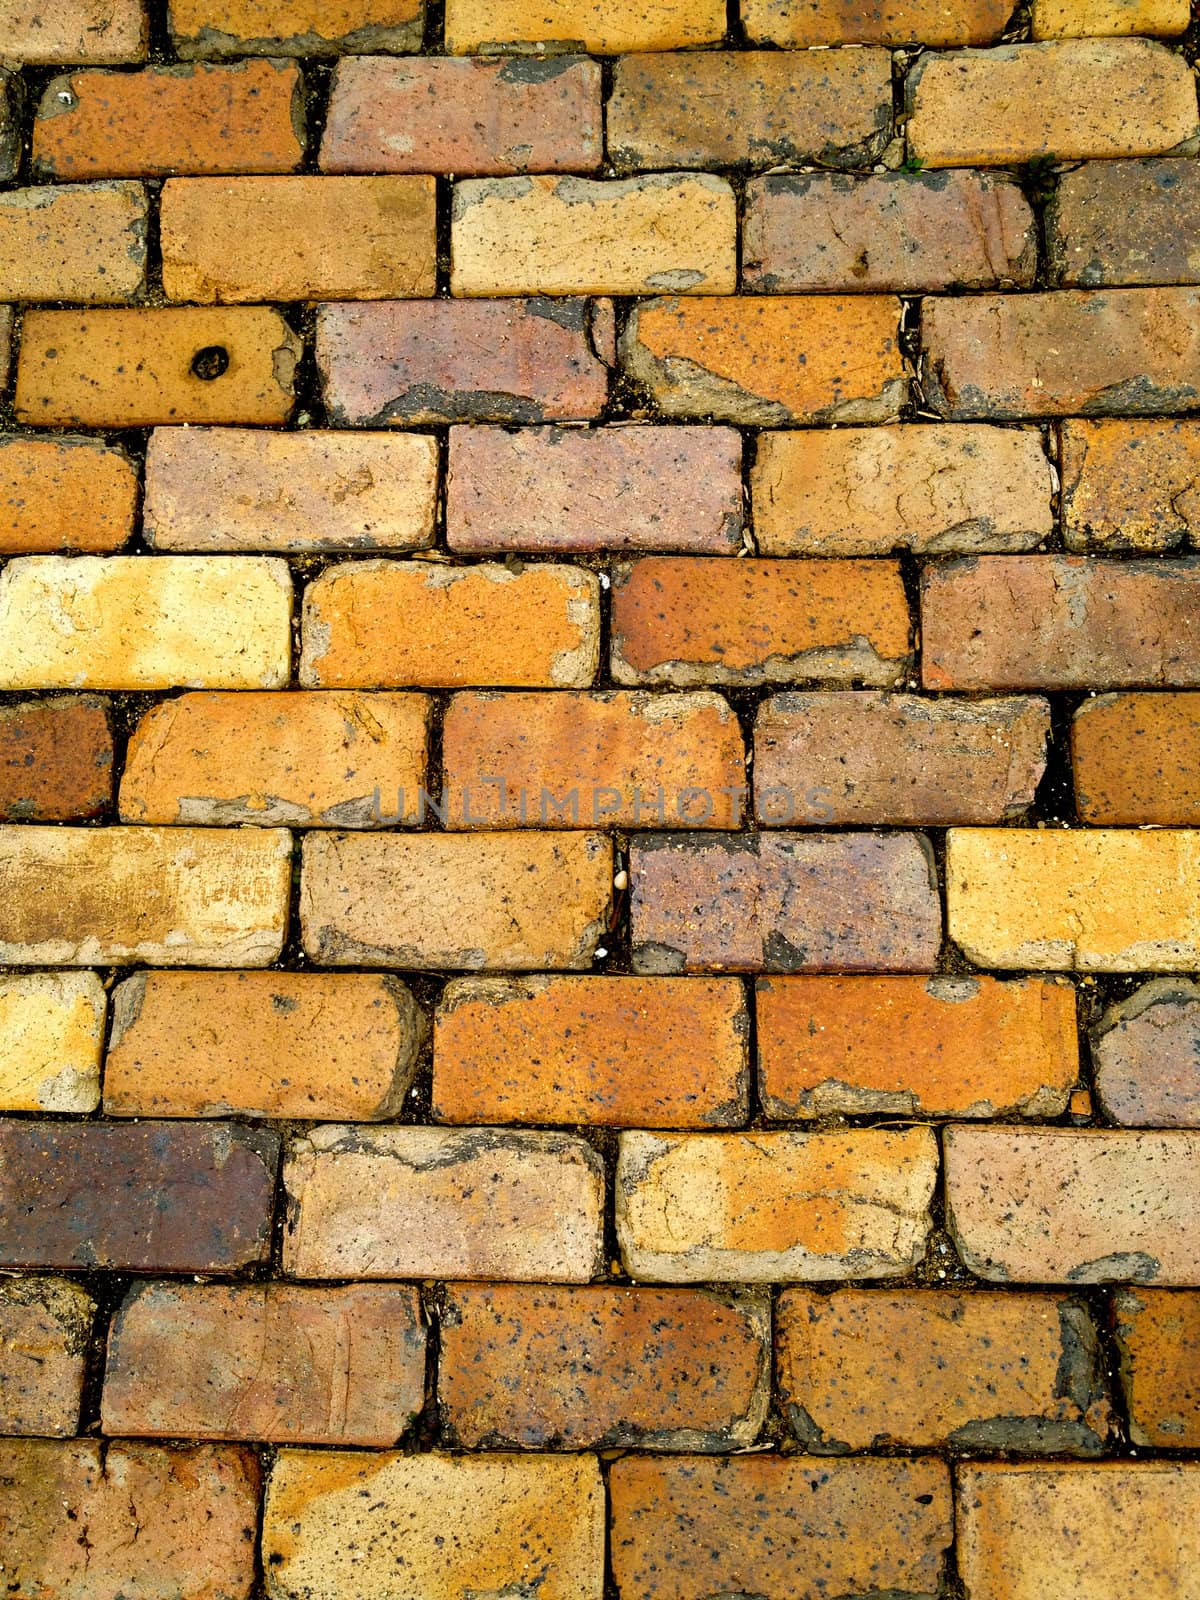 Brick Background by RefocusPhoto